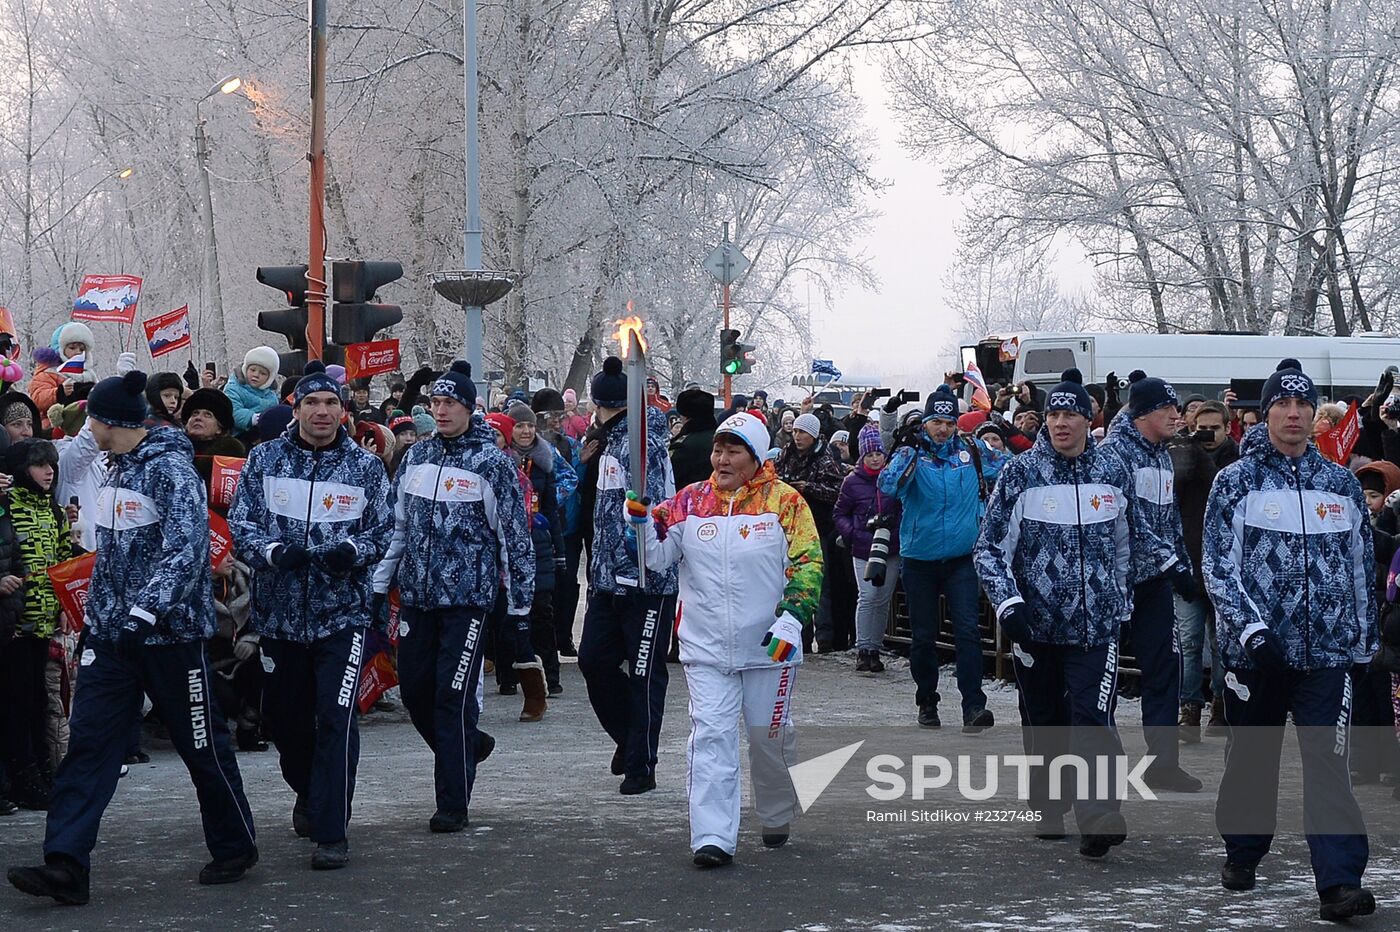 Olympic torch relay. Khakassia